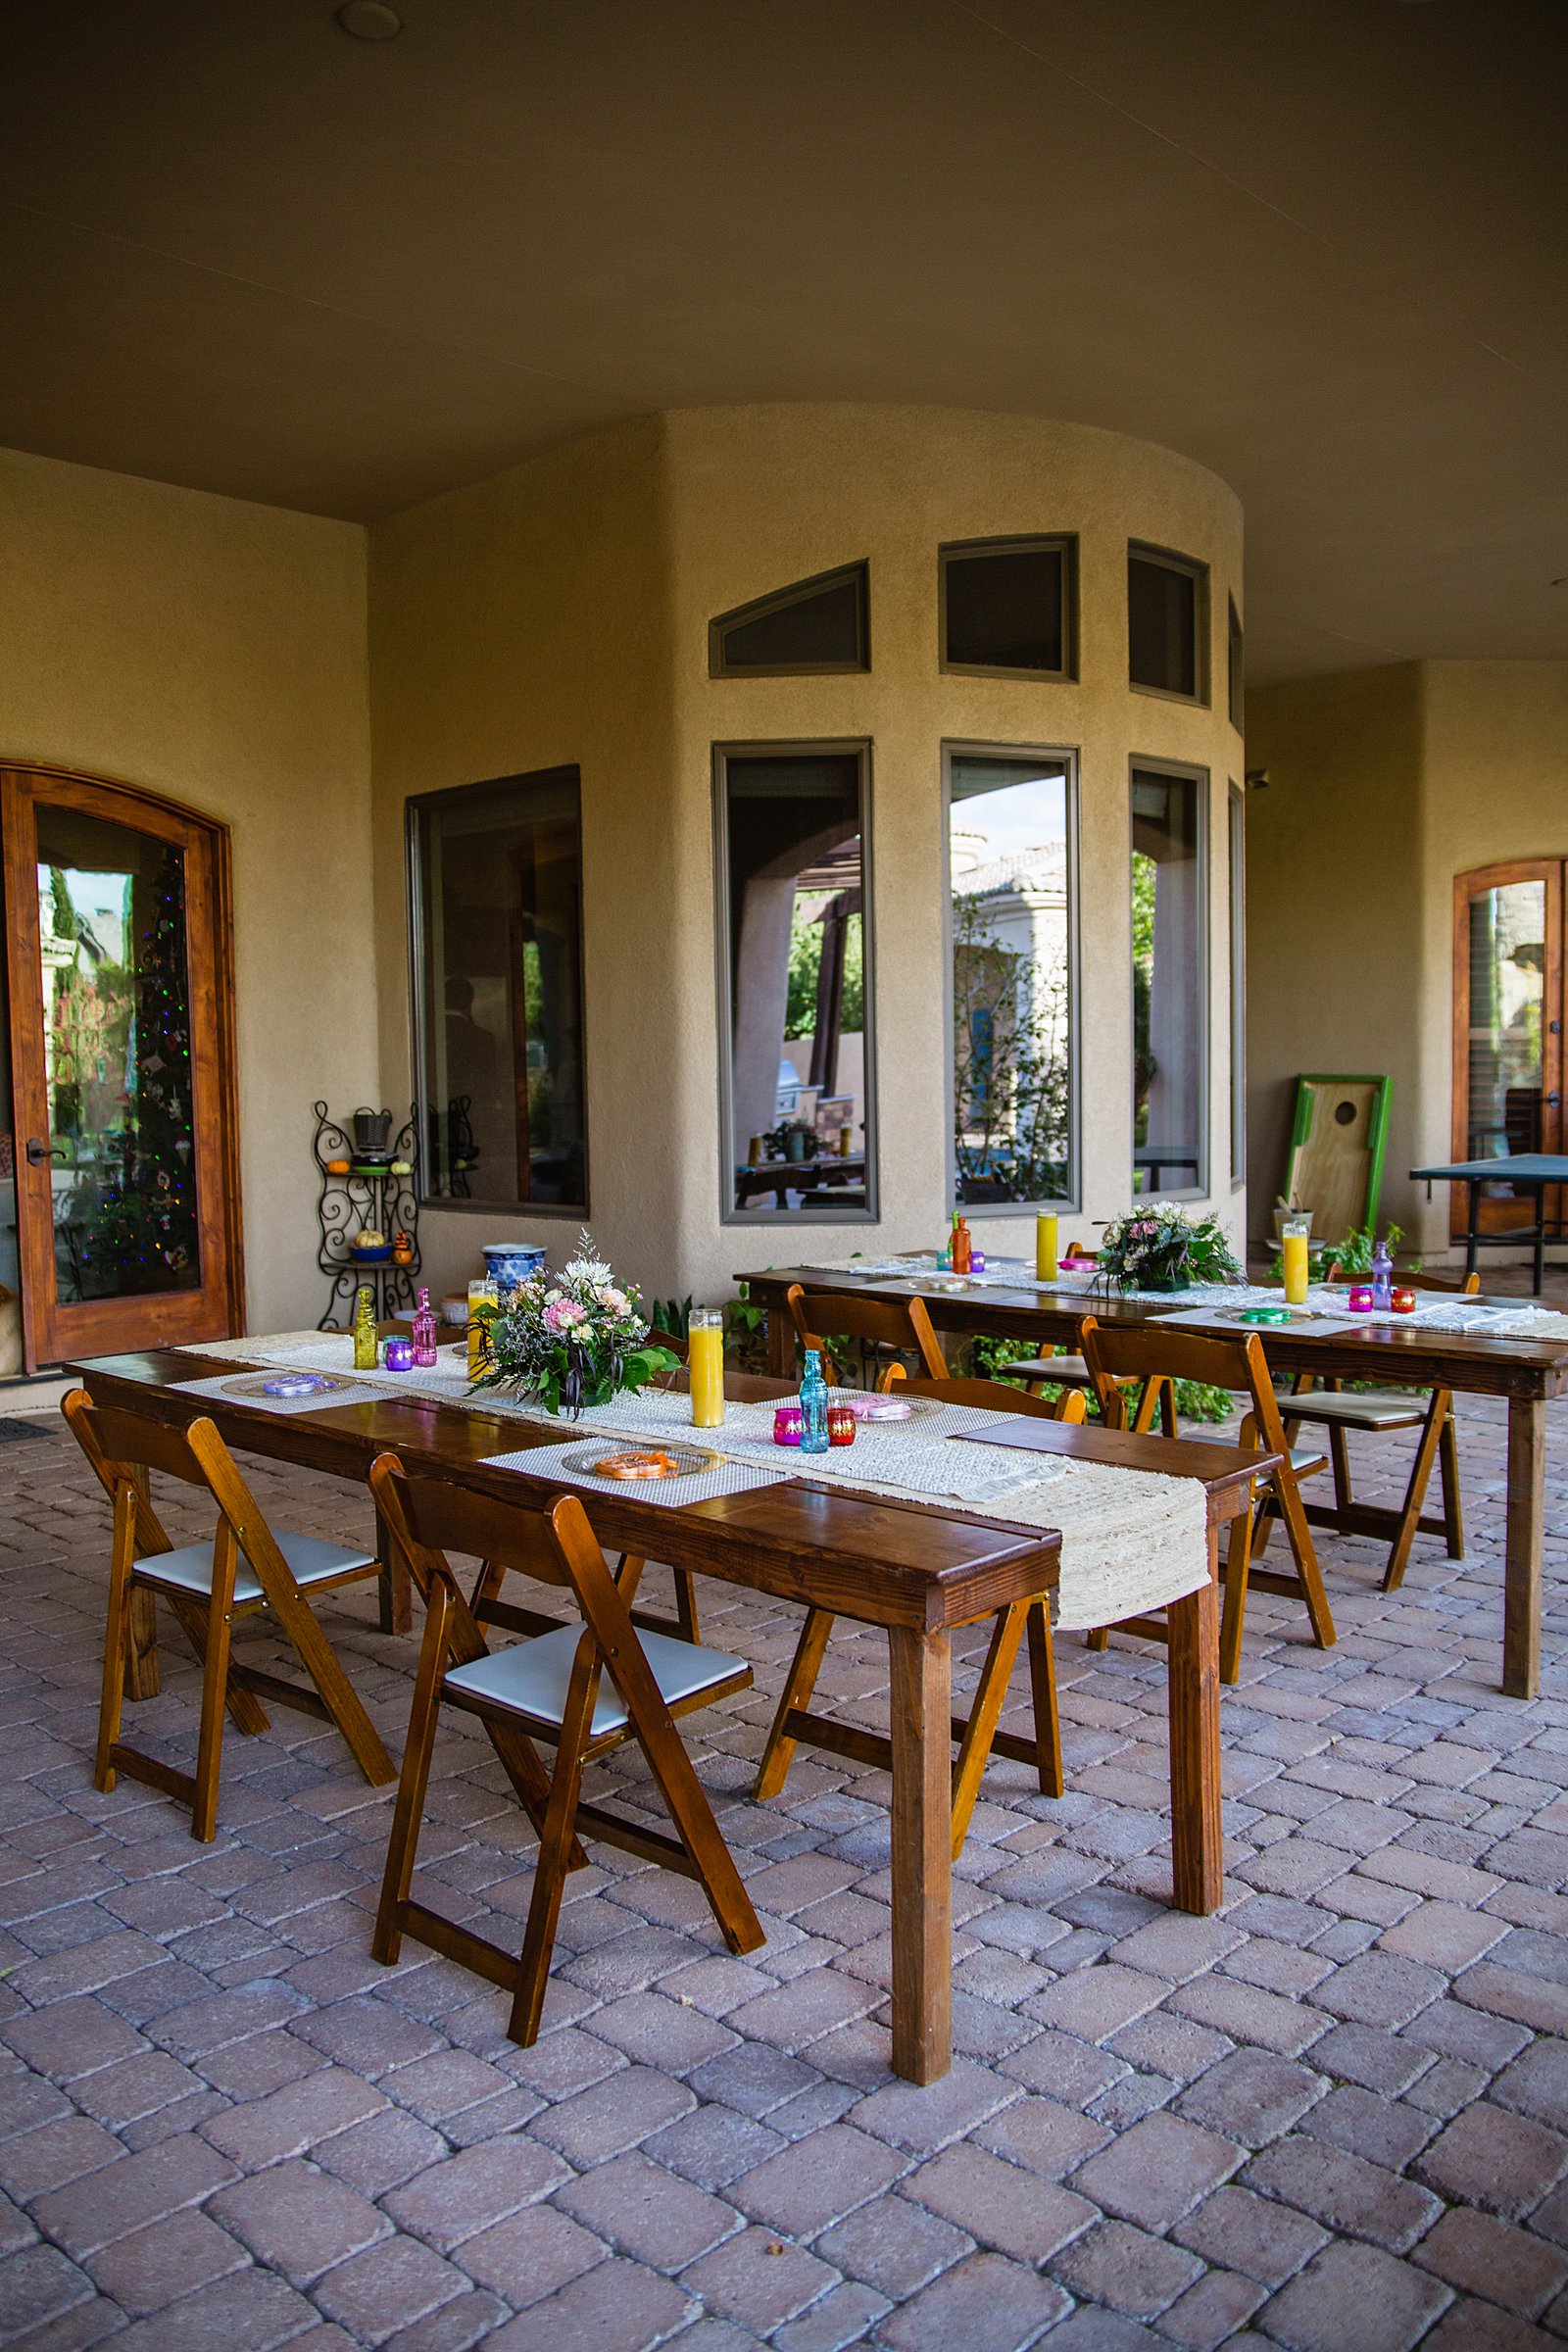 Moroccan inspired reception tables for a backyard micro wedding by Arizona wedding photographer PMA Photography.